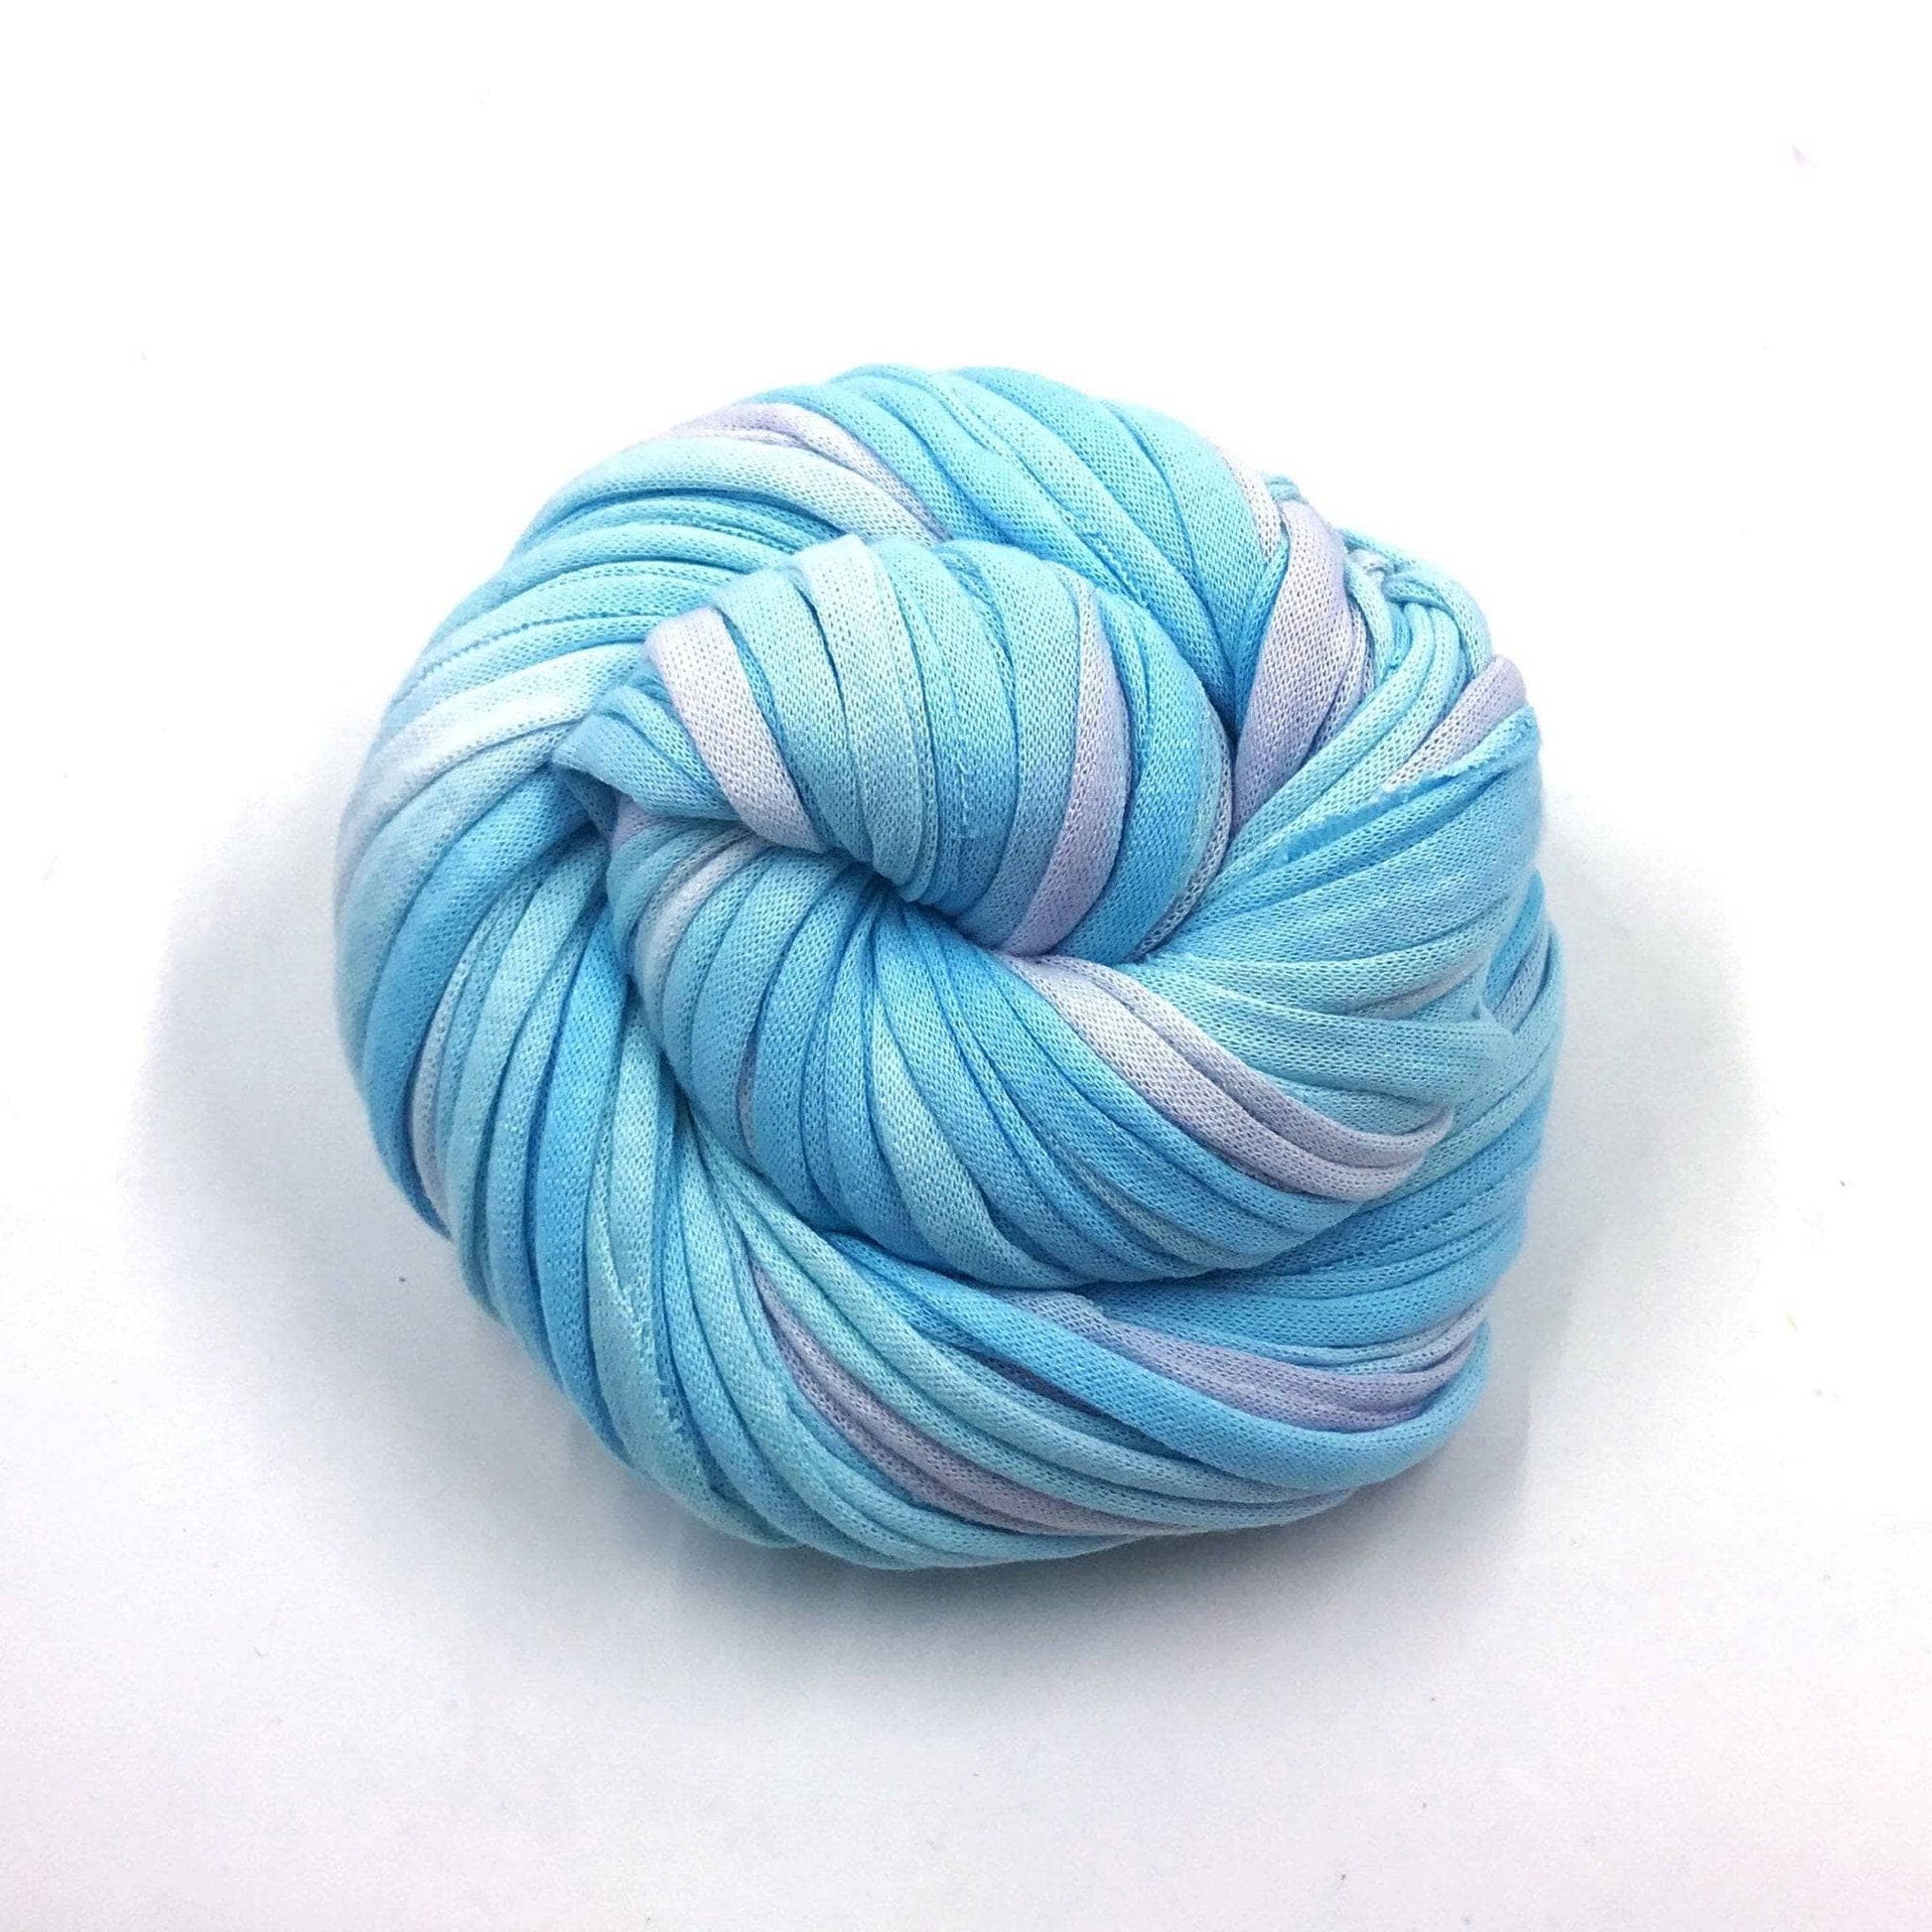 Cotton t-shirt yarn donut ball in Mermaid Swirl (blue and white) on white background